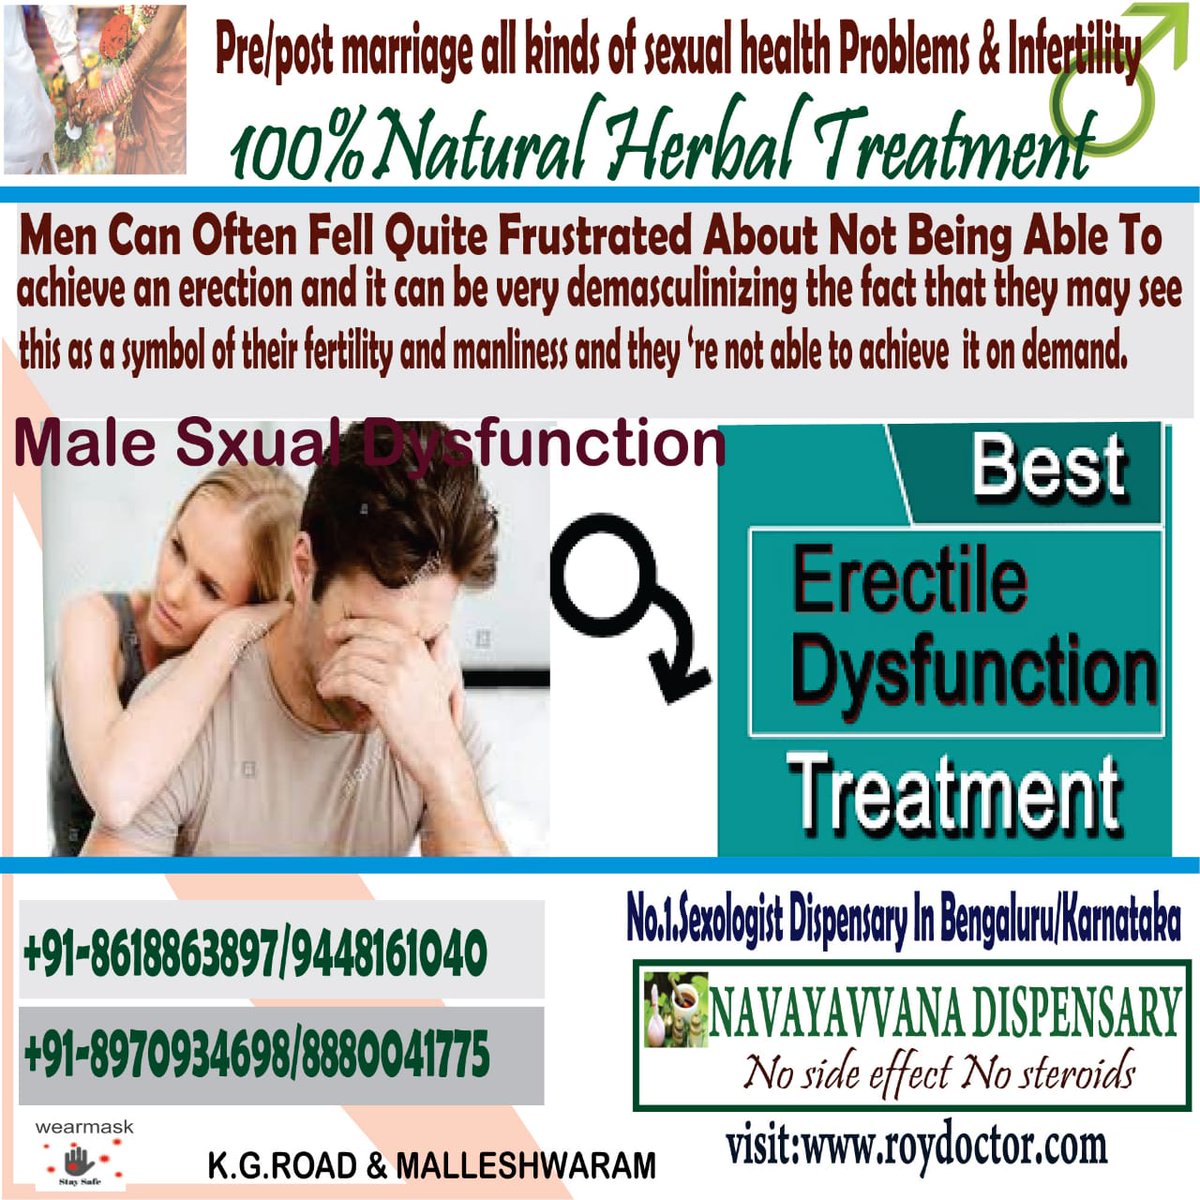 #karnataka
#best#navayavvana 
#sexologist 
Dispensary
#bengaluru
#herbal
#treatment
#erectileproblem
#weak erection
#erectile dysfunction
#male sxual health problem
#good results
roydoctor.com